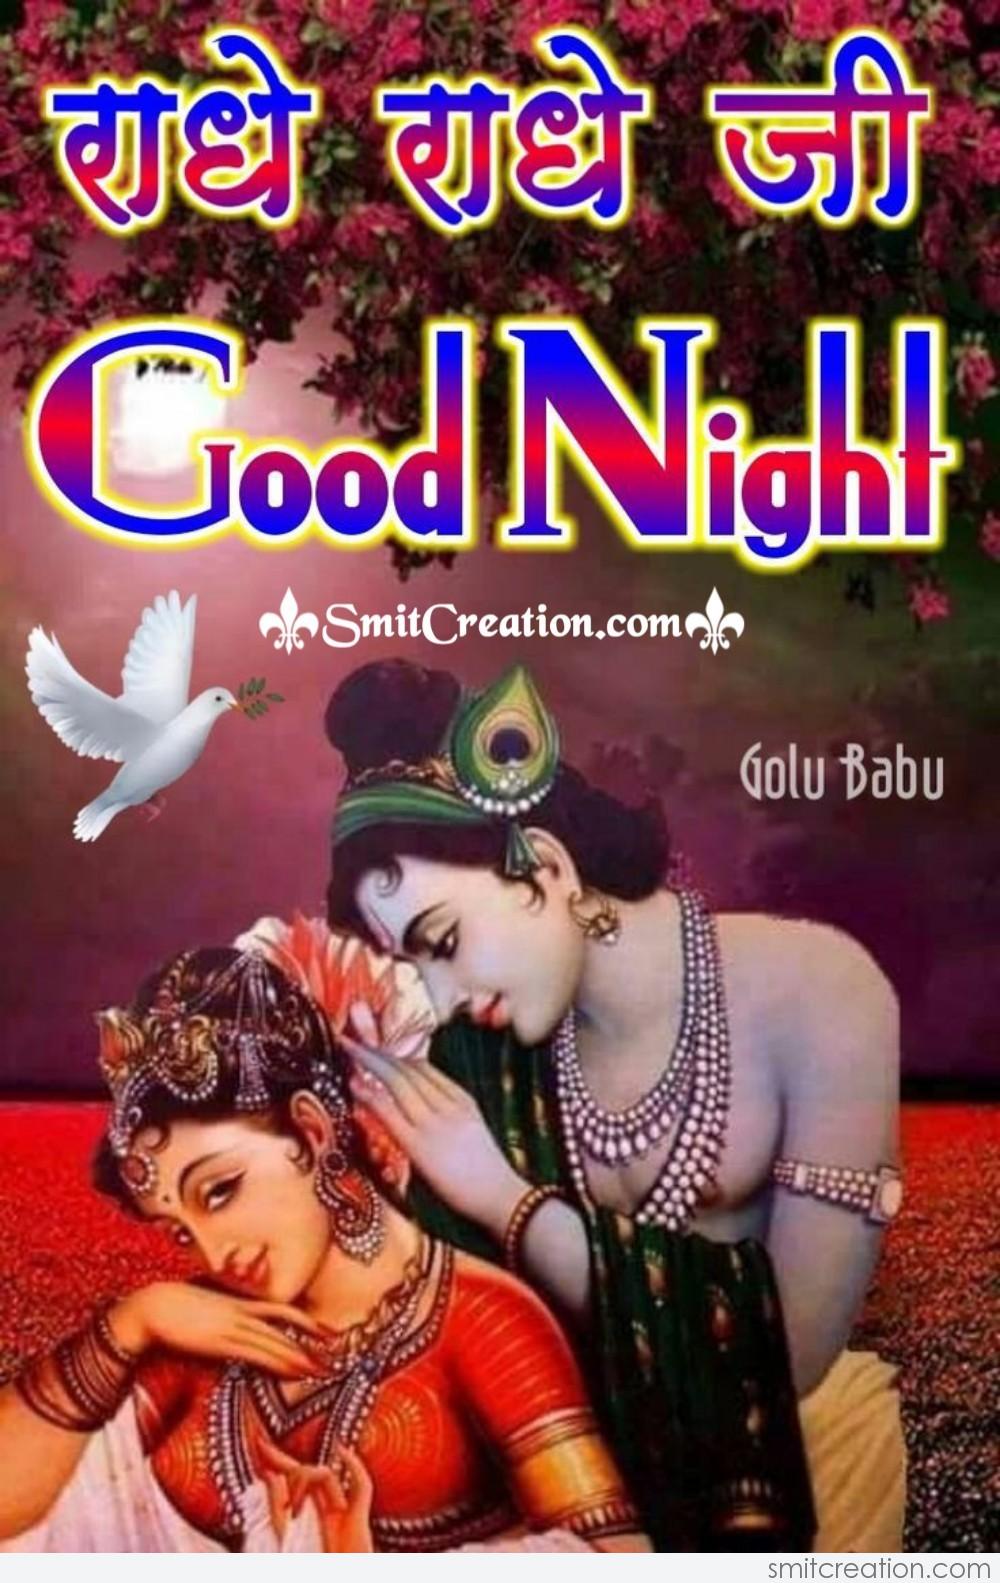 Radhe Radhe Ji Good Night - SmitCreation.com